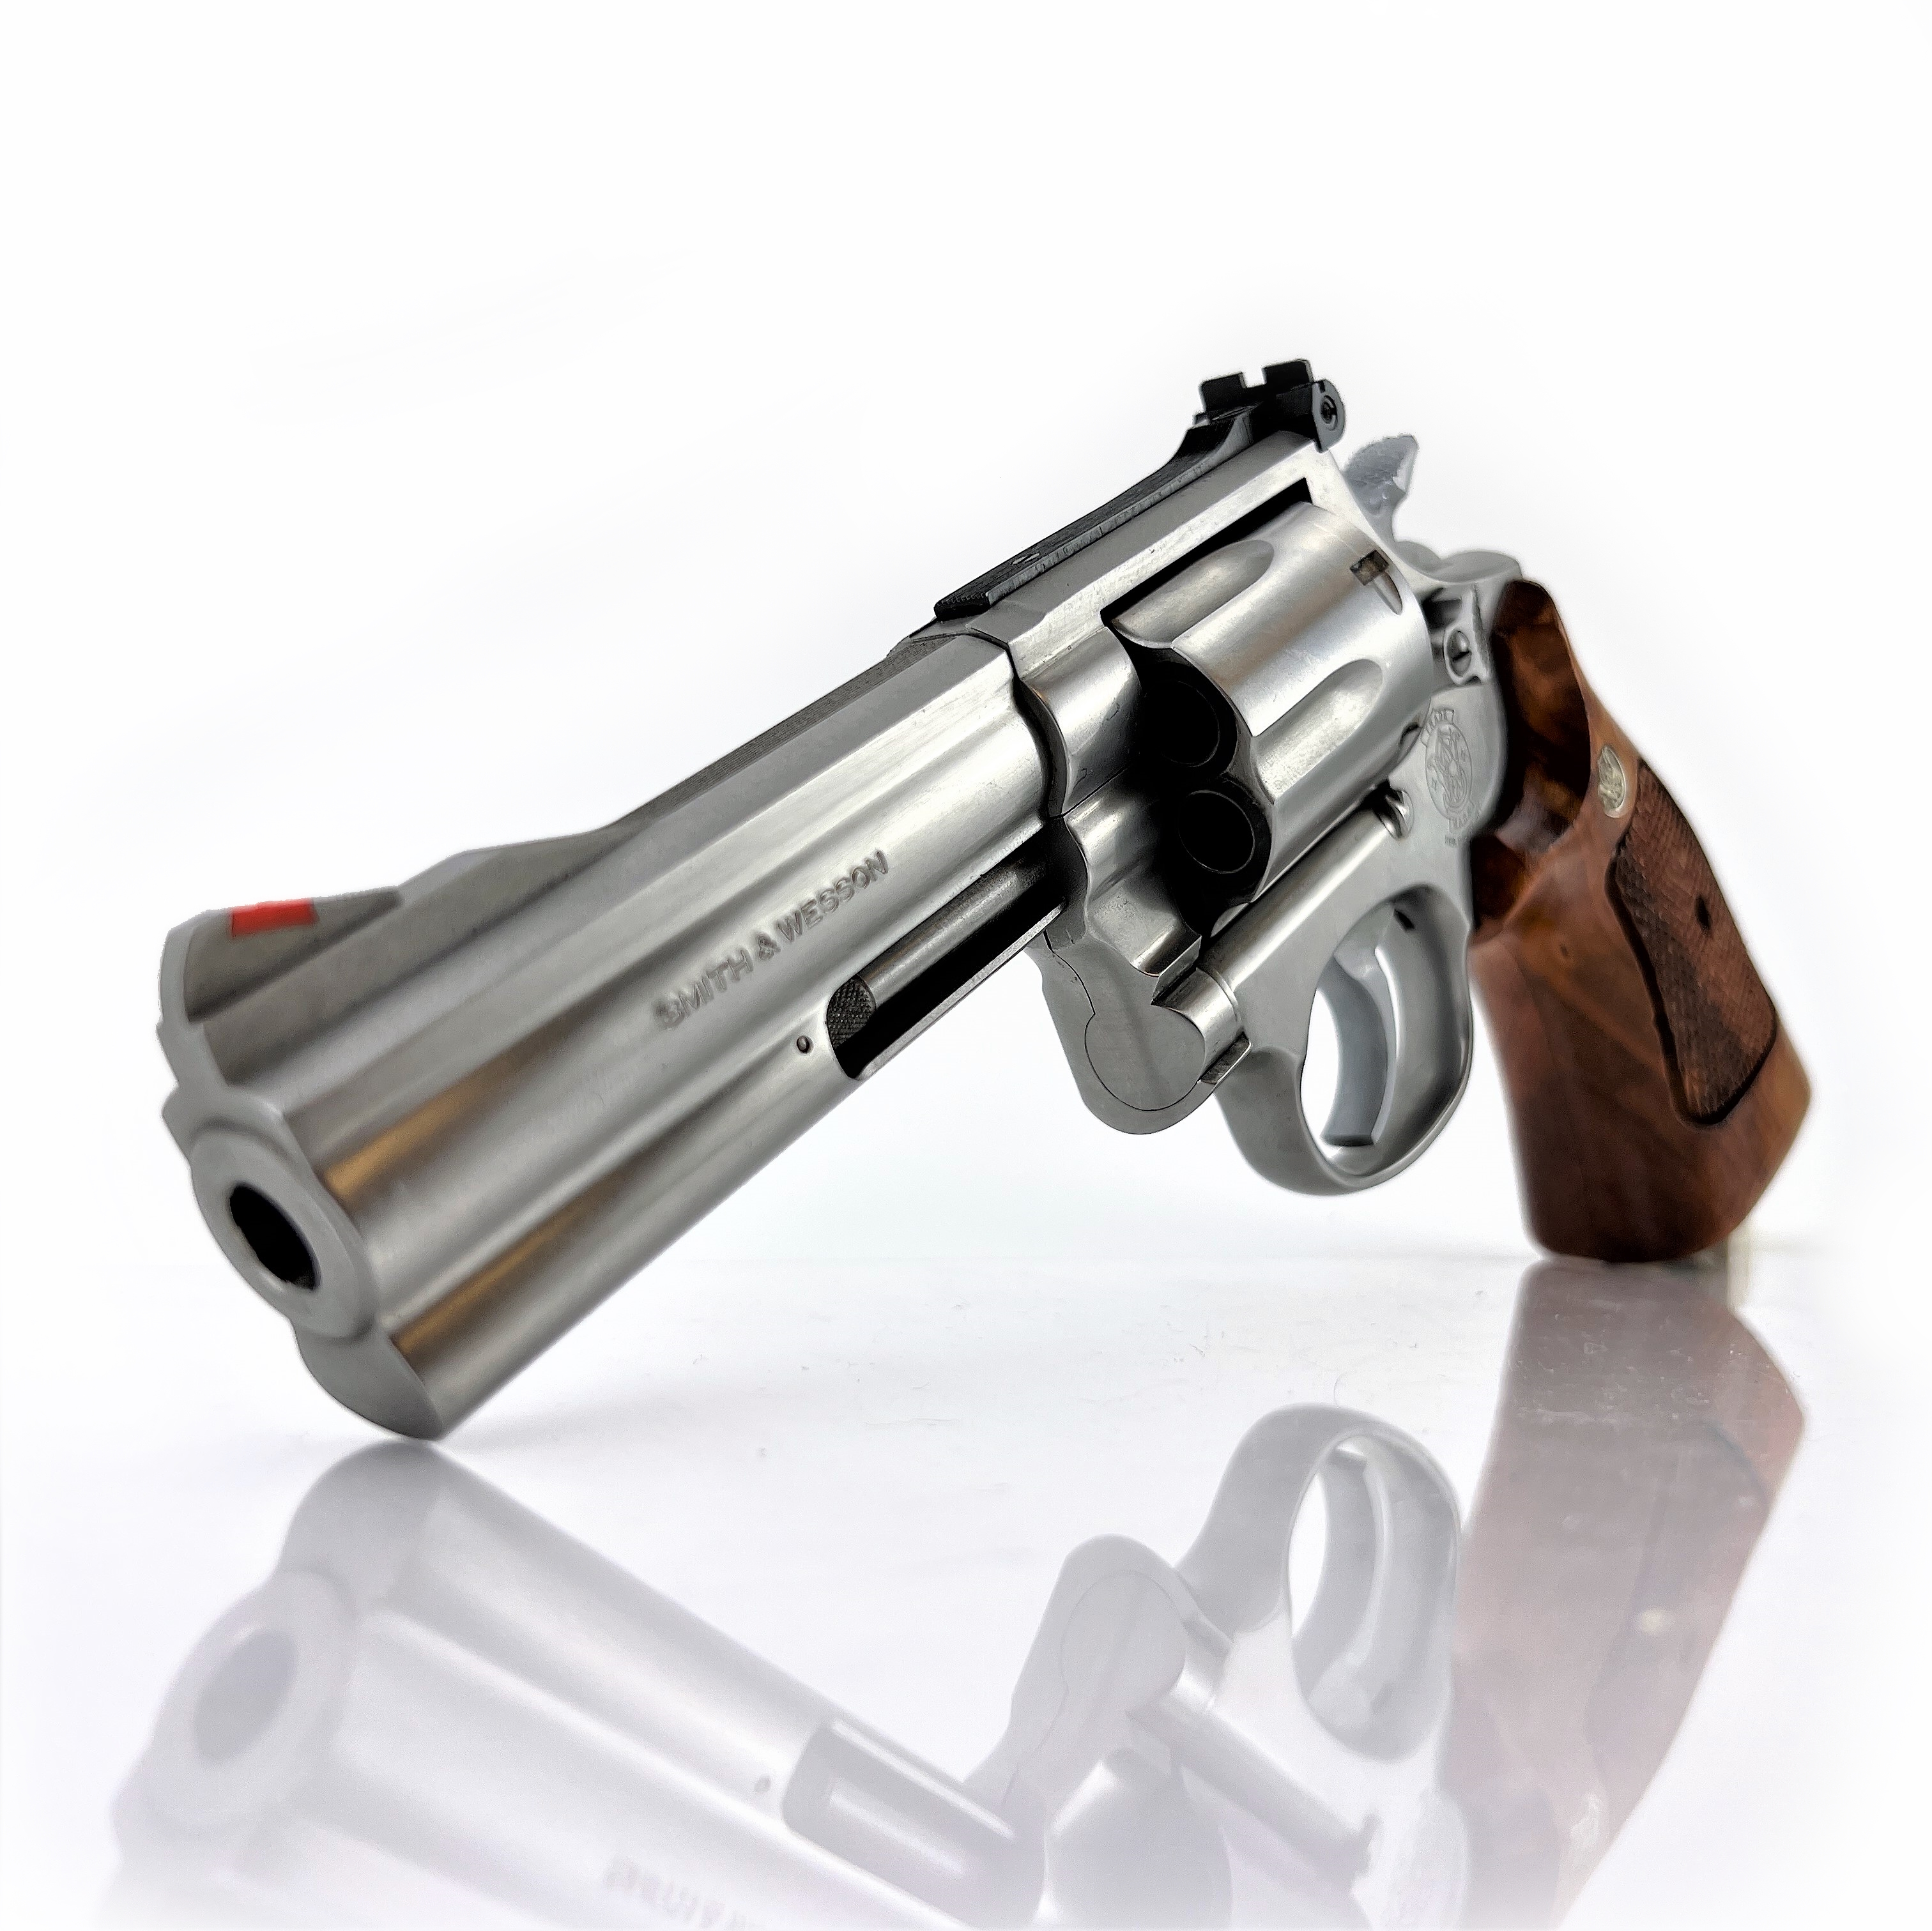 Smith & Wesson Revolver Modell 686-3 gebraucht